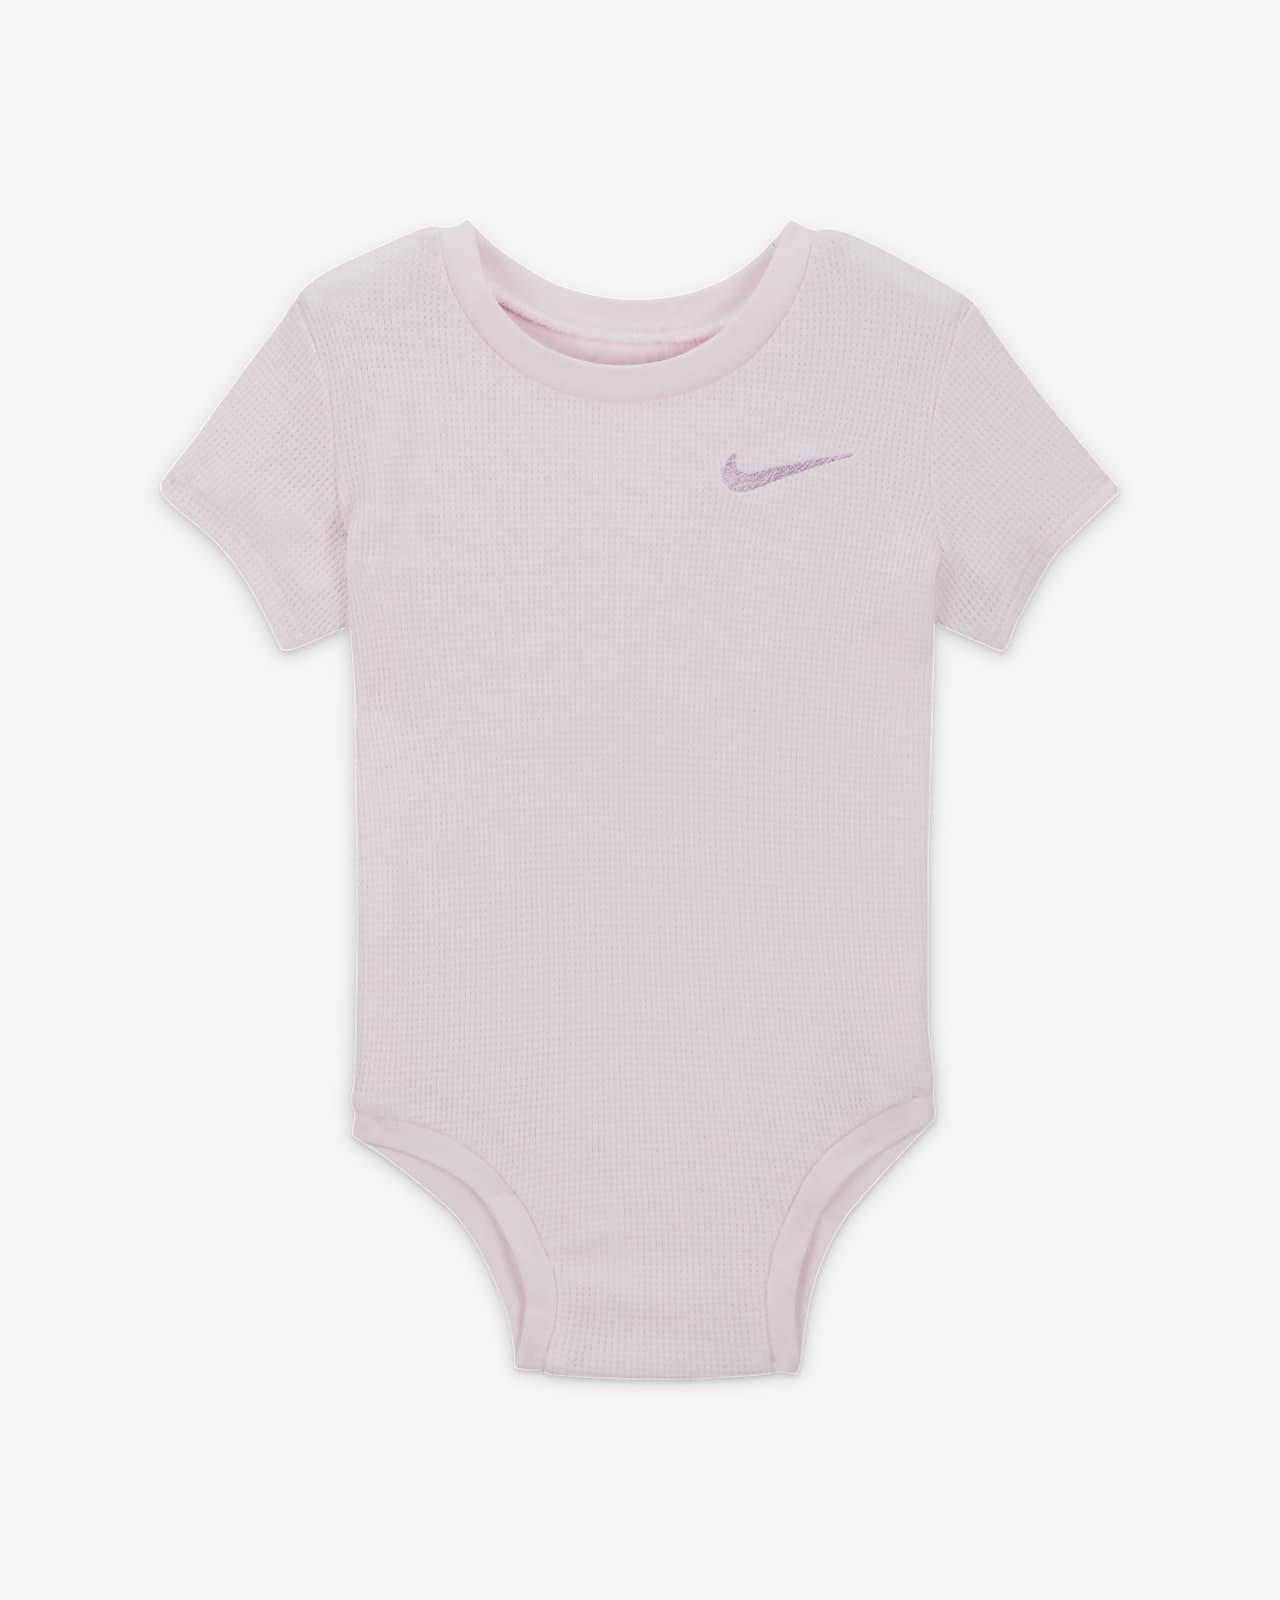 Nike ReadySet Baby Bodysuit